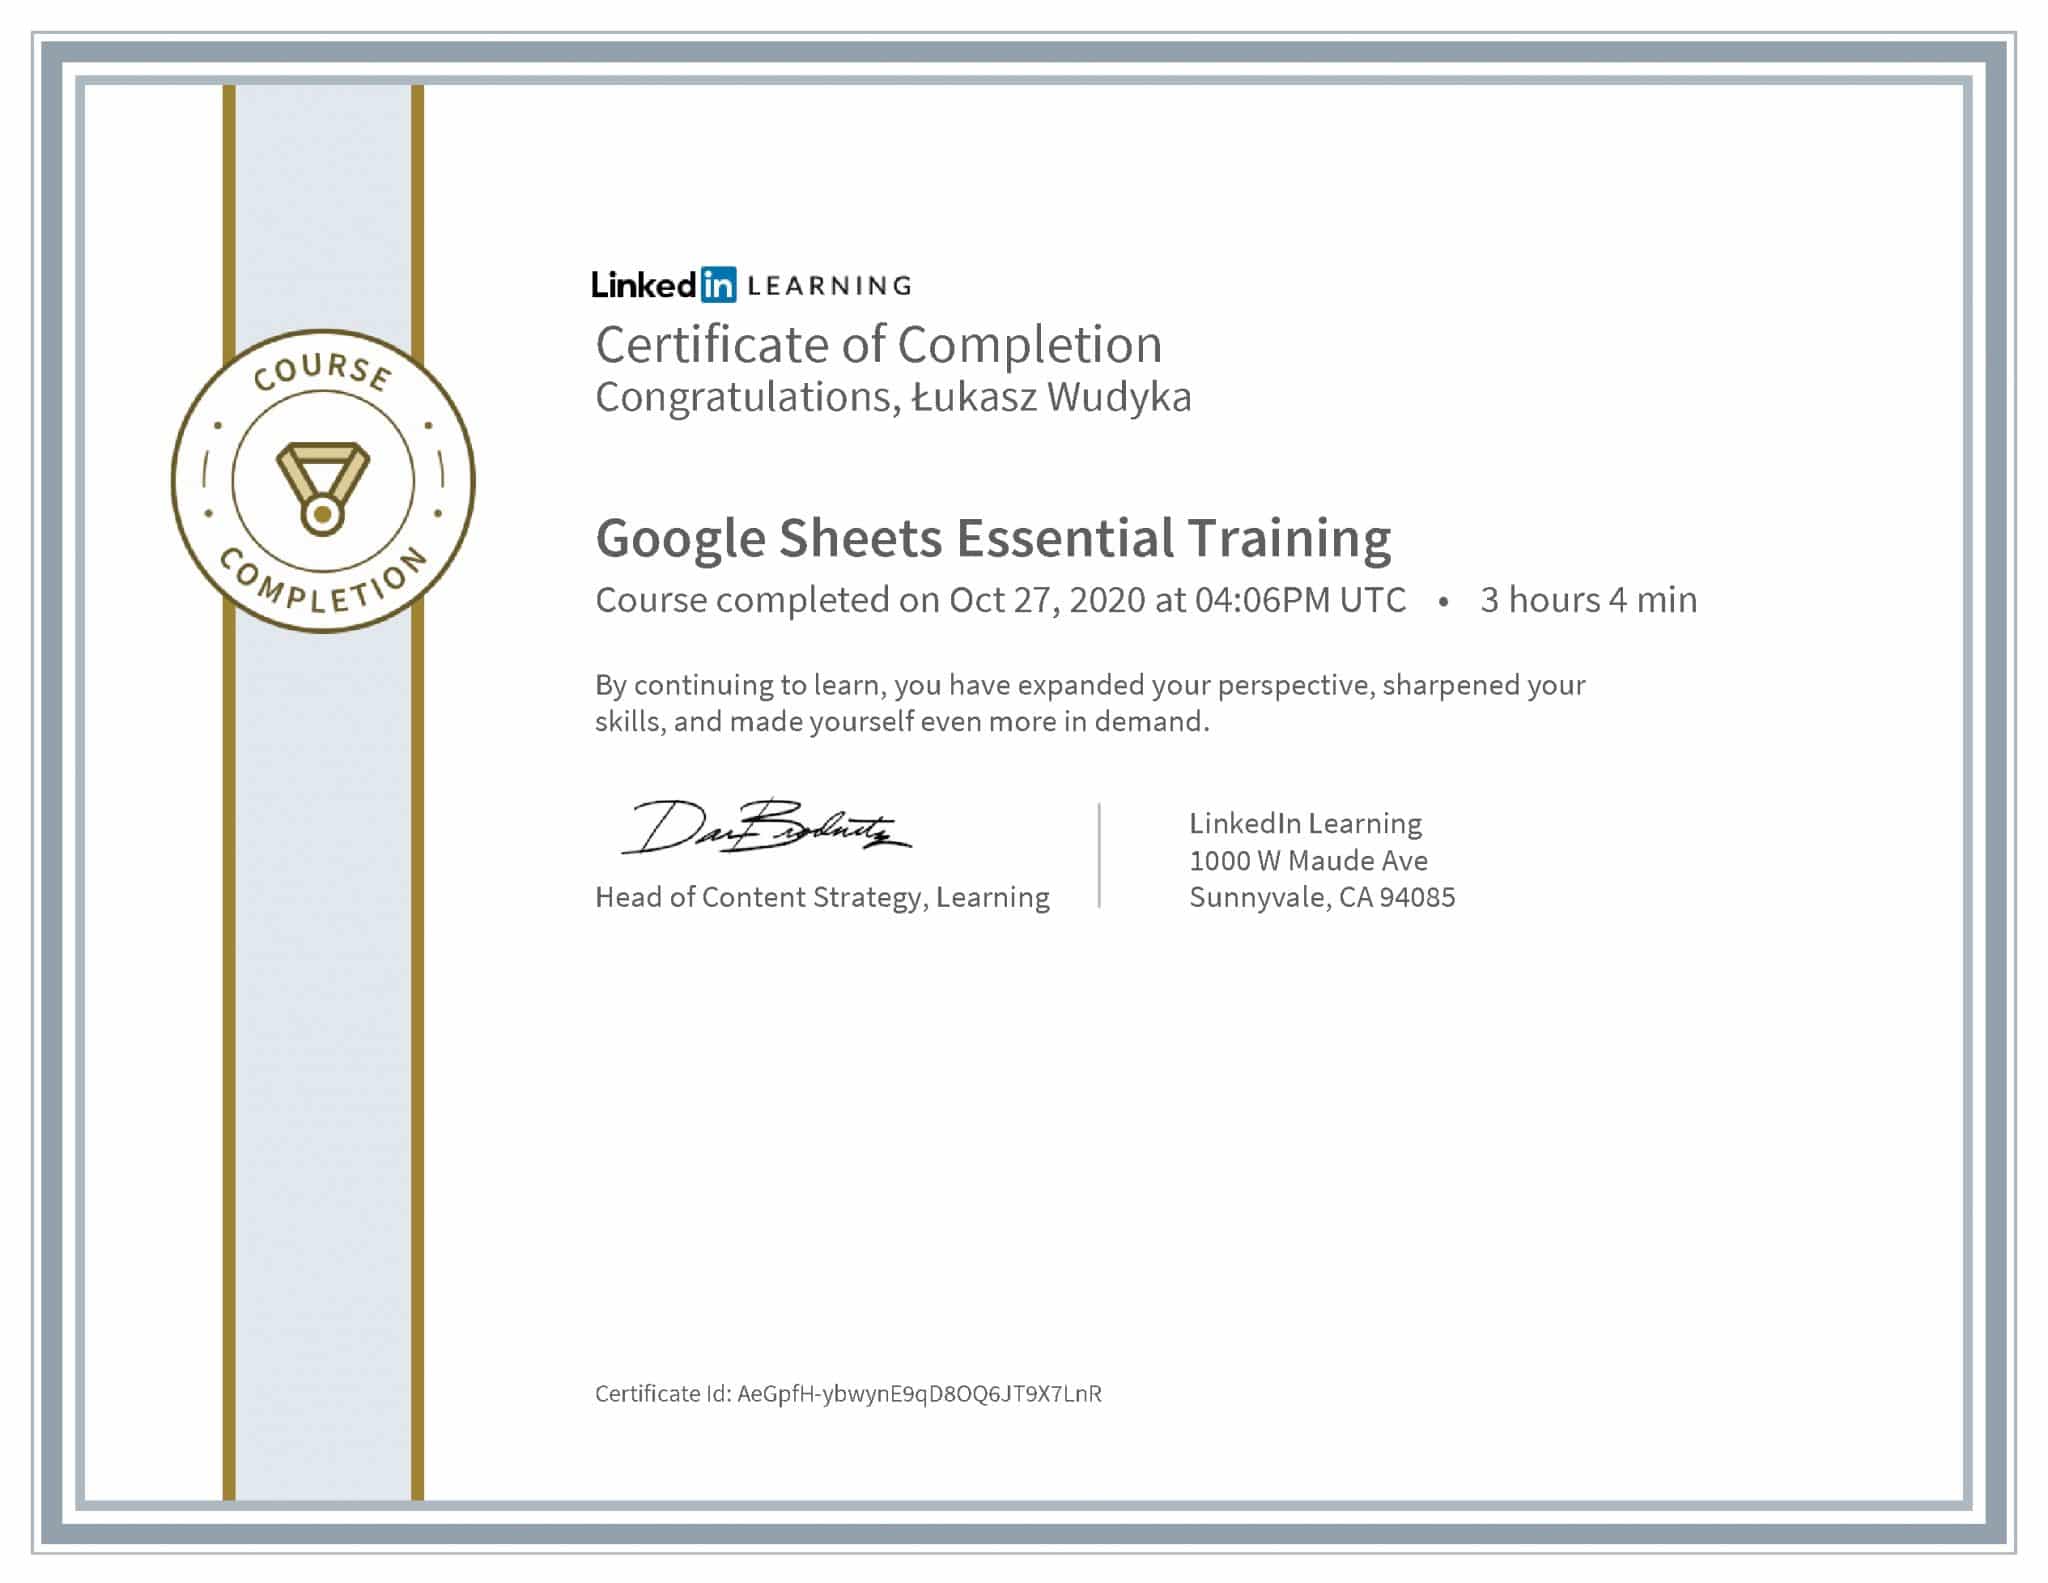 Łukasz Wudyka certyfikat LinkedIn Google Sheets Essential Training